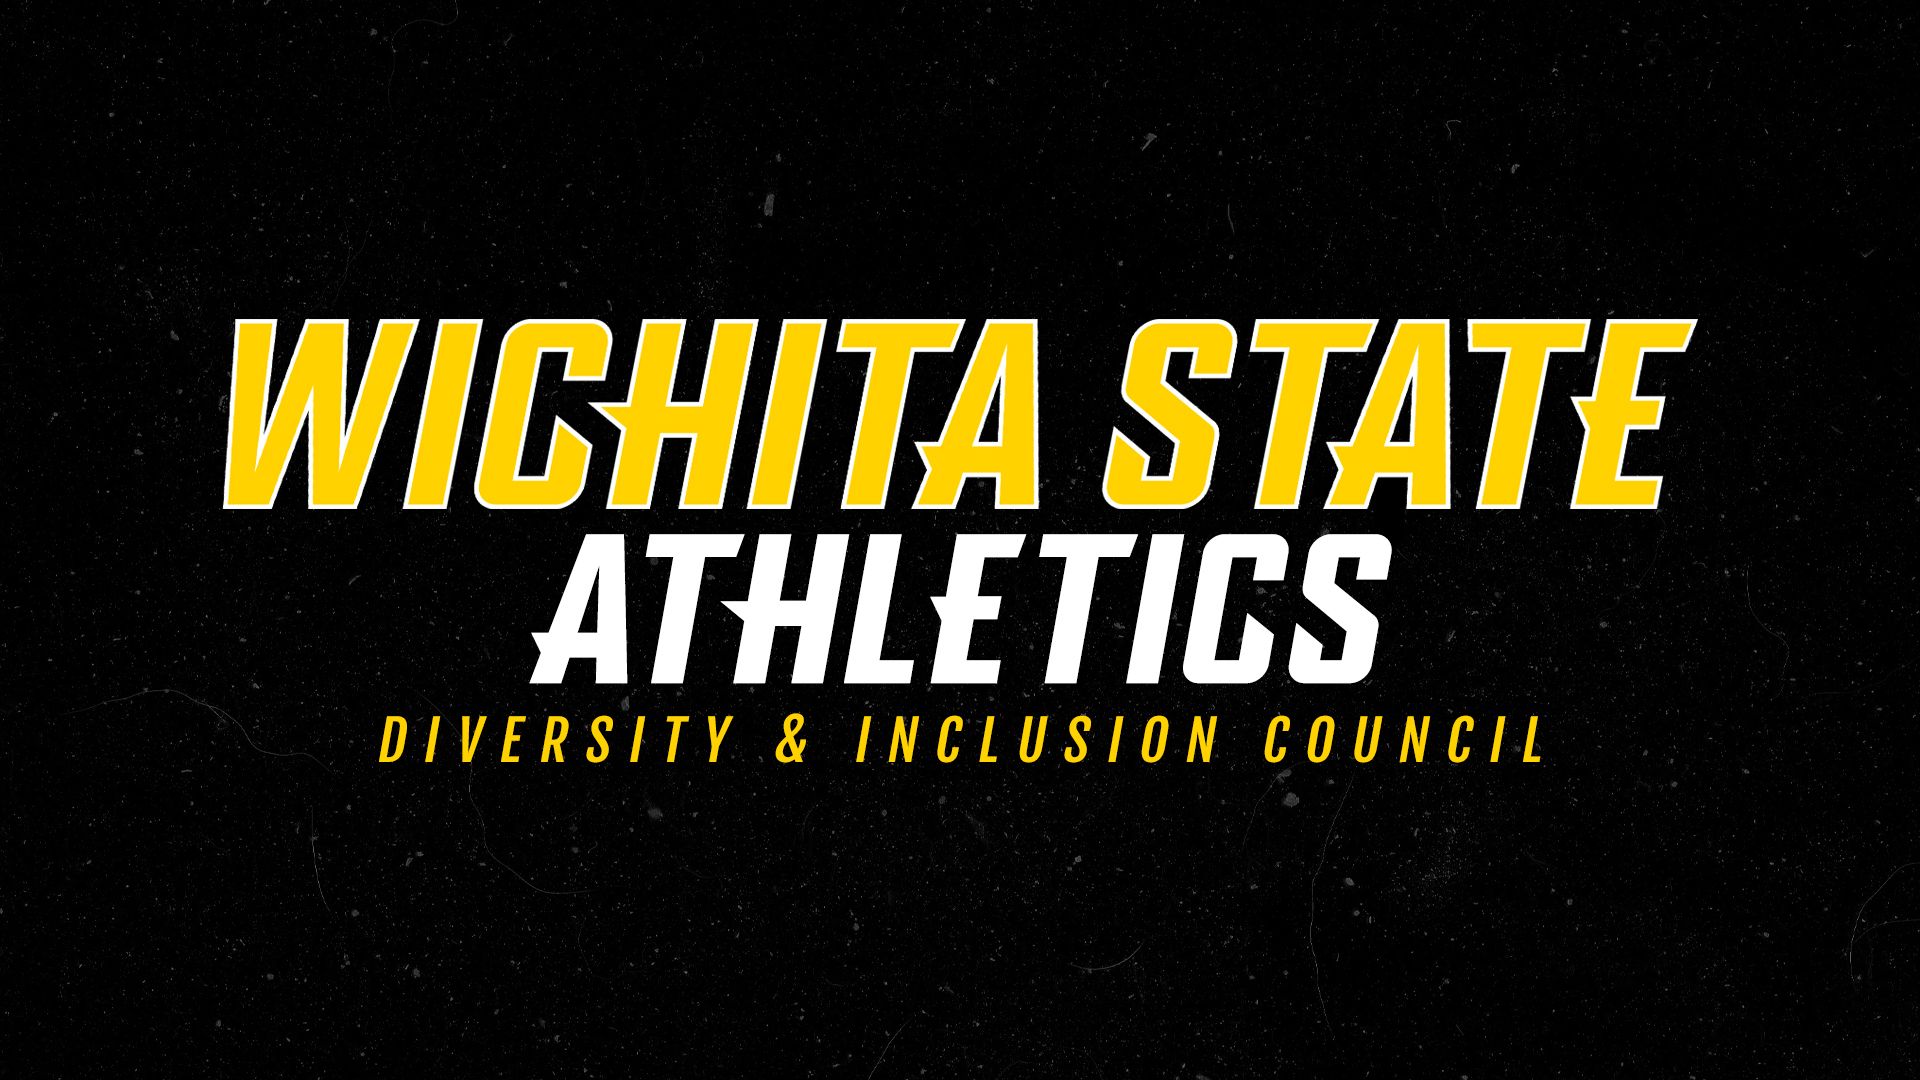 Diversity & Inclusion Council State Athletics